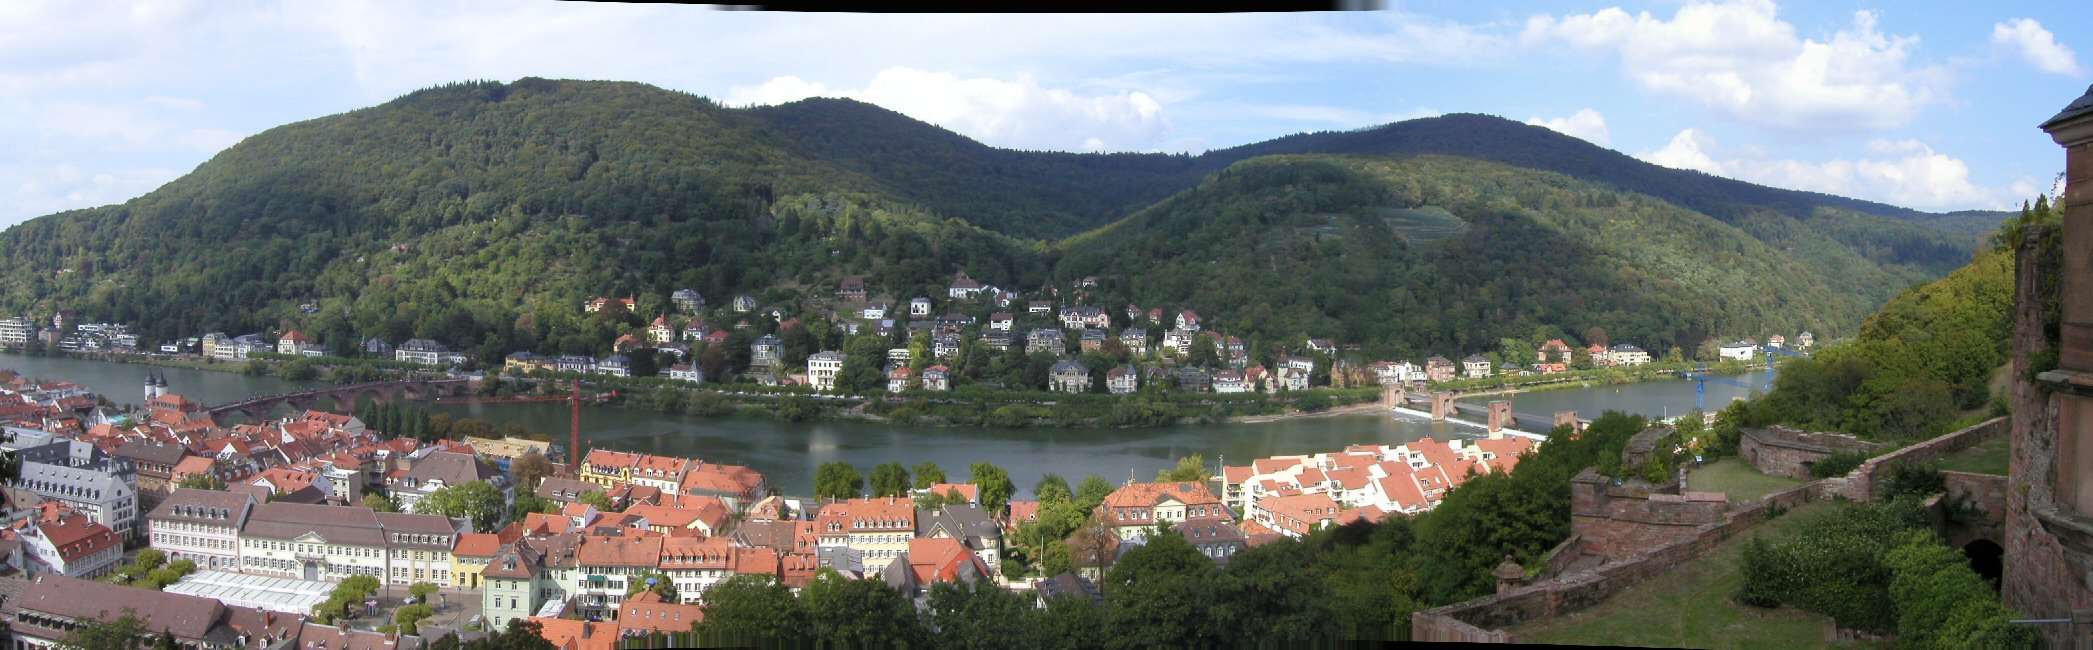 Heidelberg and Neckar River Panorama from Heidelberg Castle